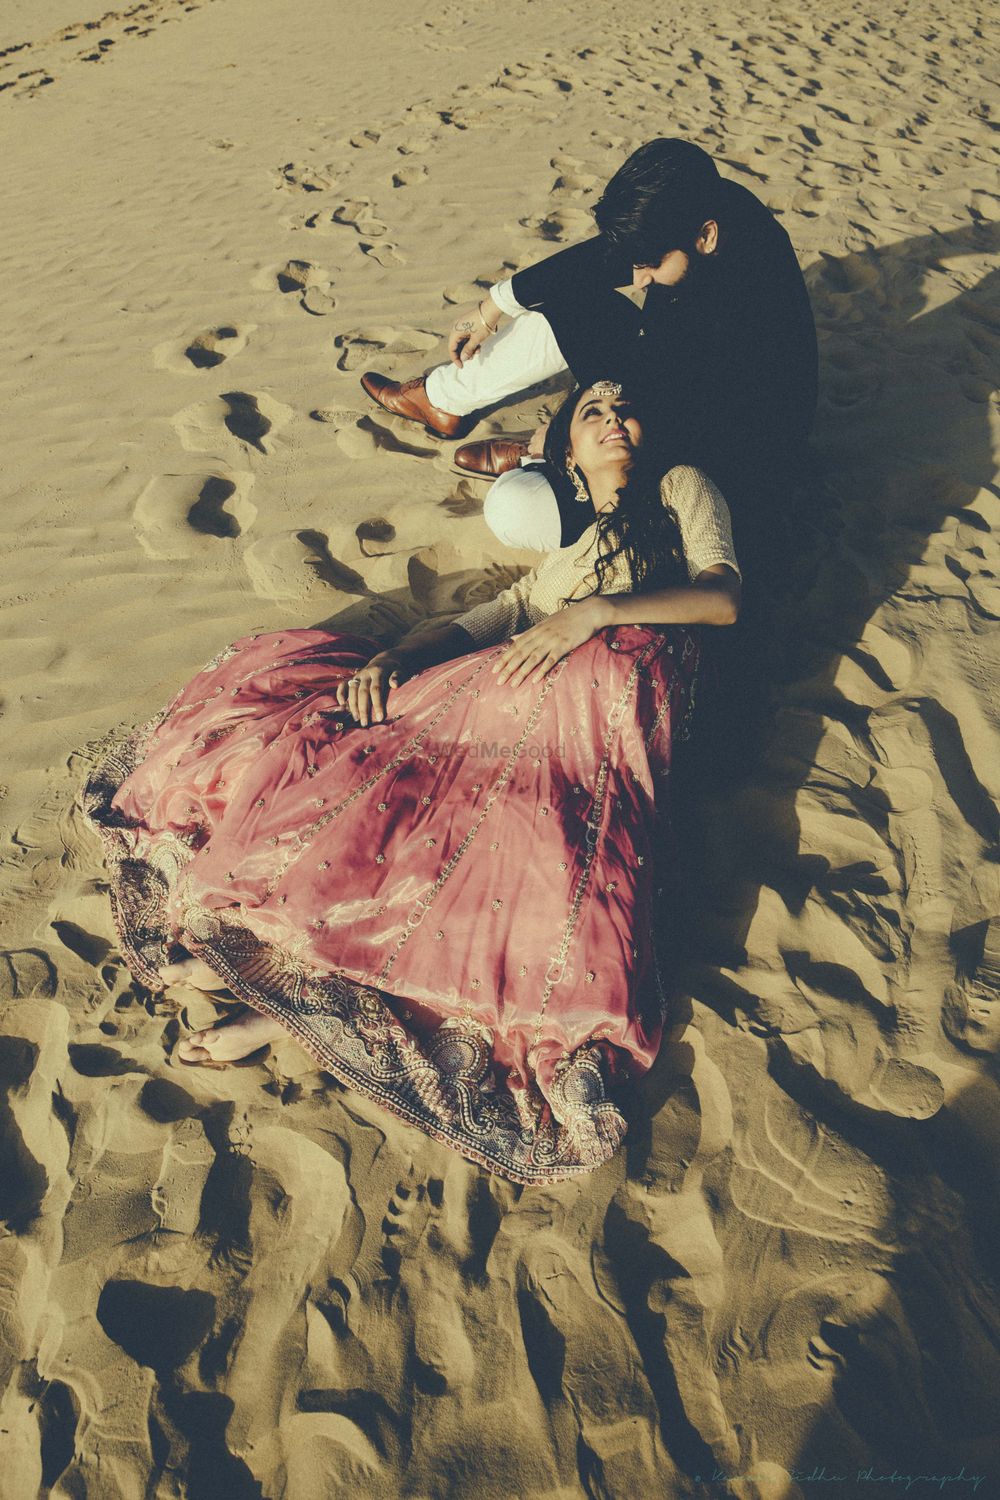 Photo of Pre Wedding Shoot in Desert